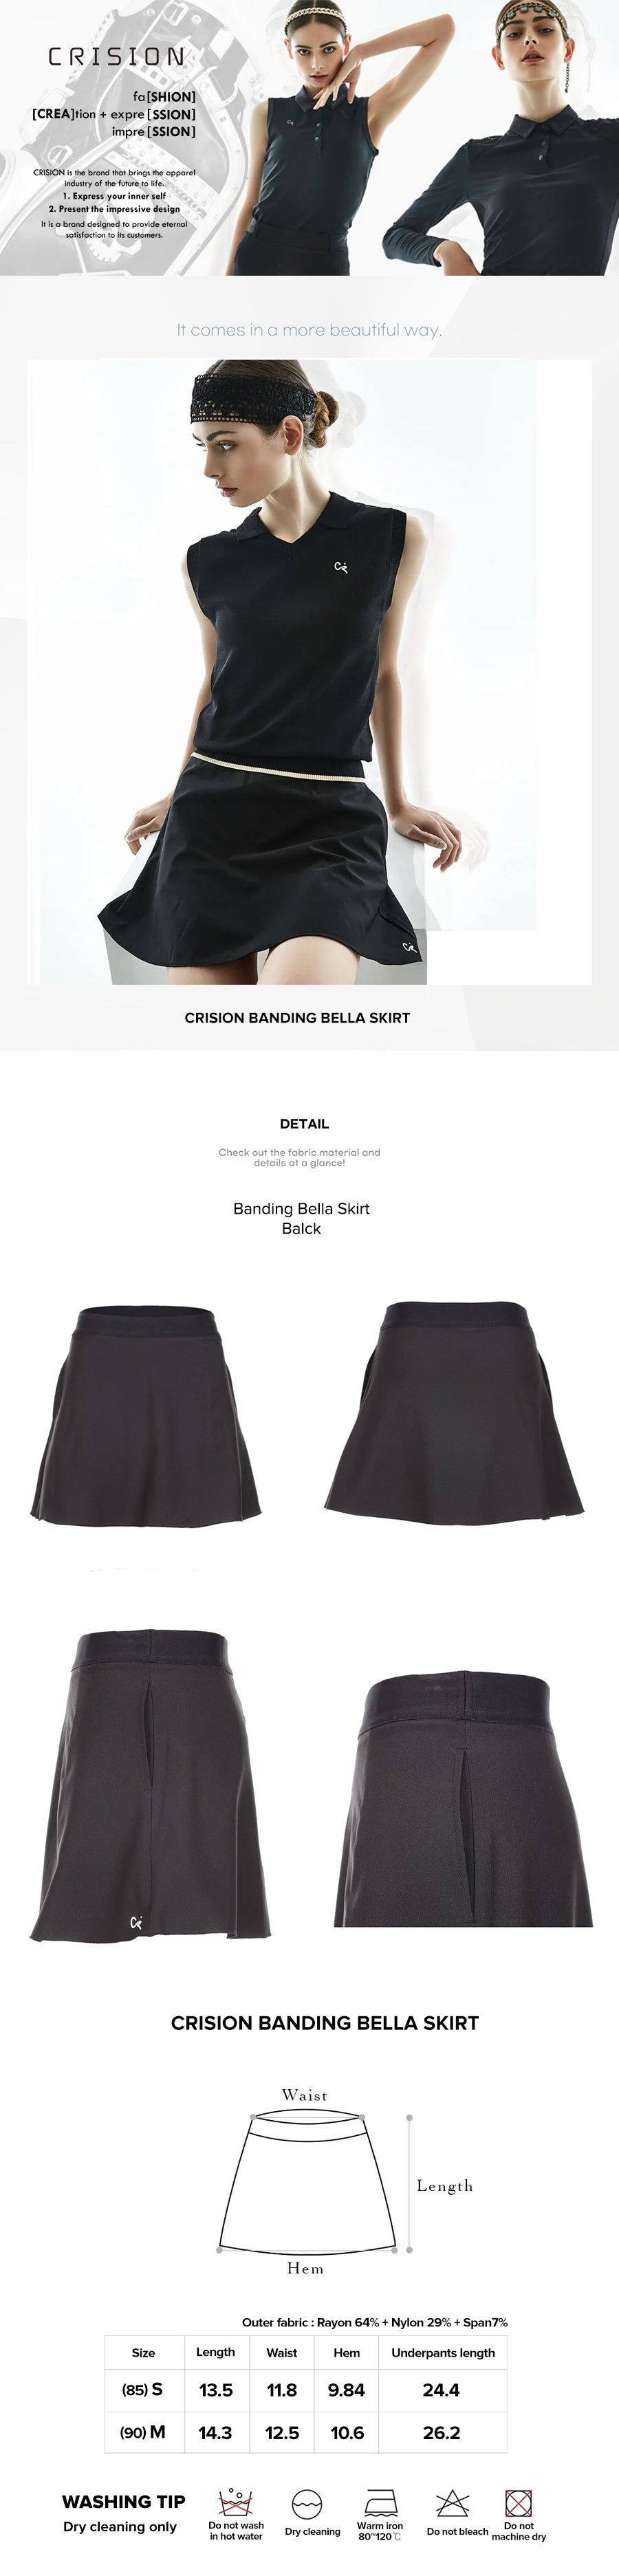 crision-banding-bella-skirt